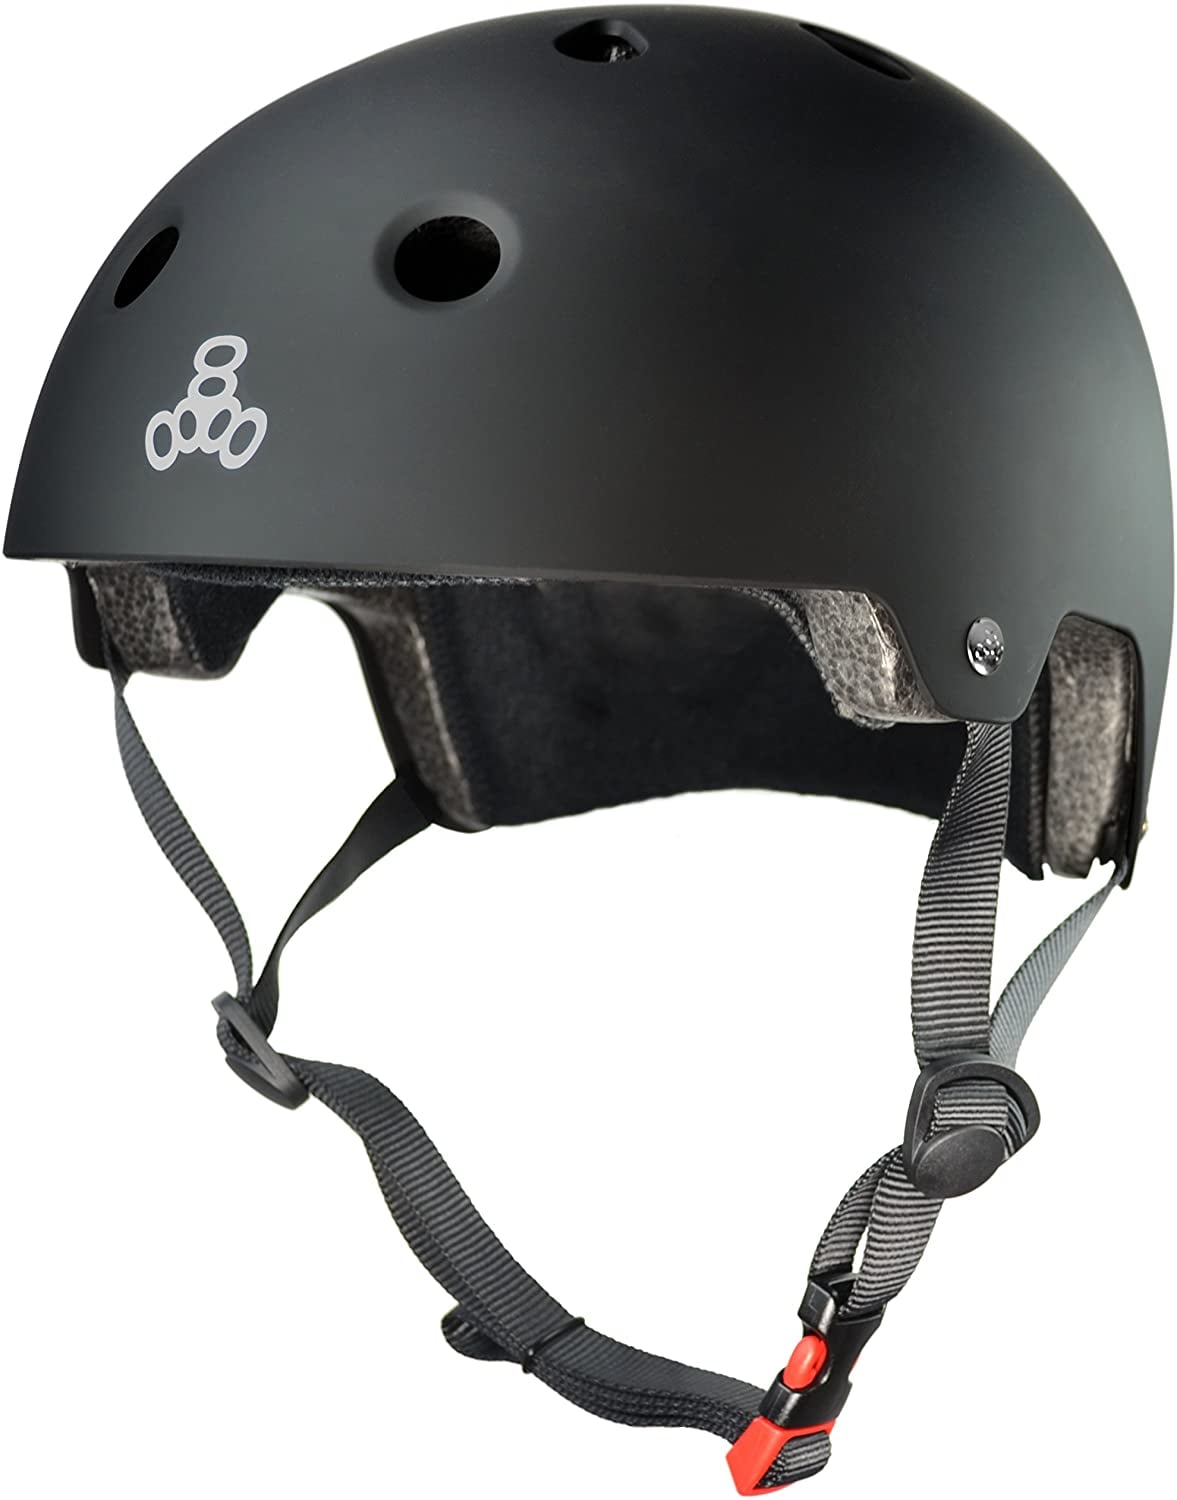 Adult Youth ProRider BMX Bike & Skate Helmet 3 Sizes Available: Kids 